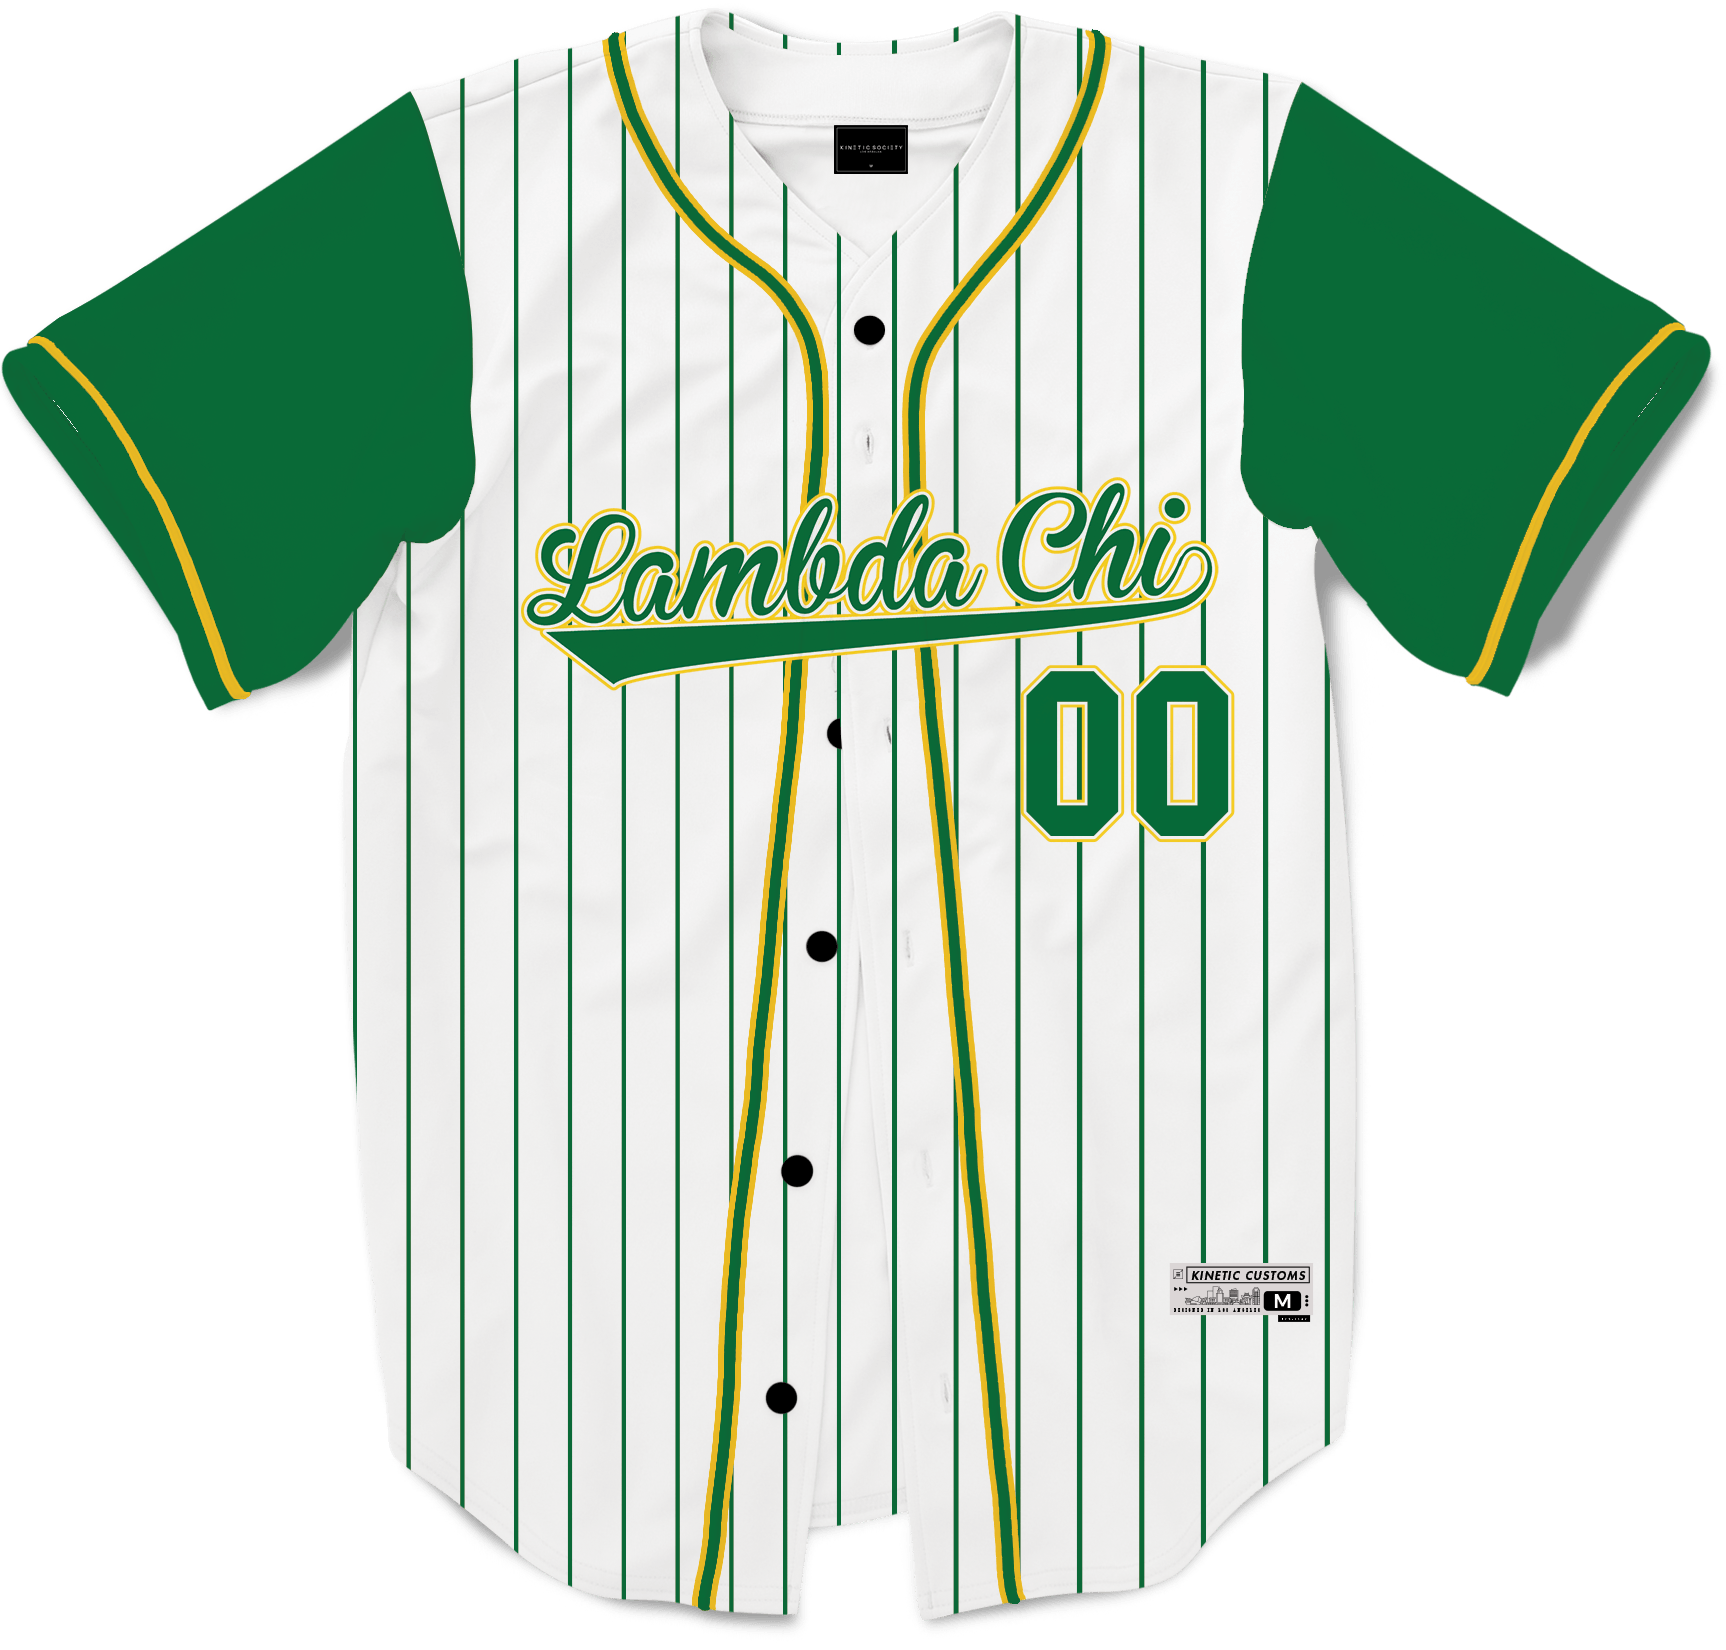 Lambda Chi Alpha - House Baseball Jersey Premium Baseball Kinetic Society LLC 